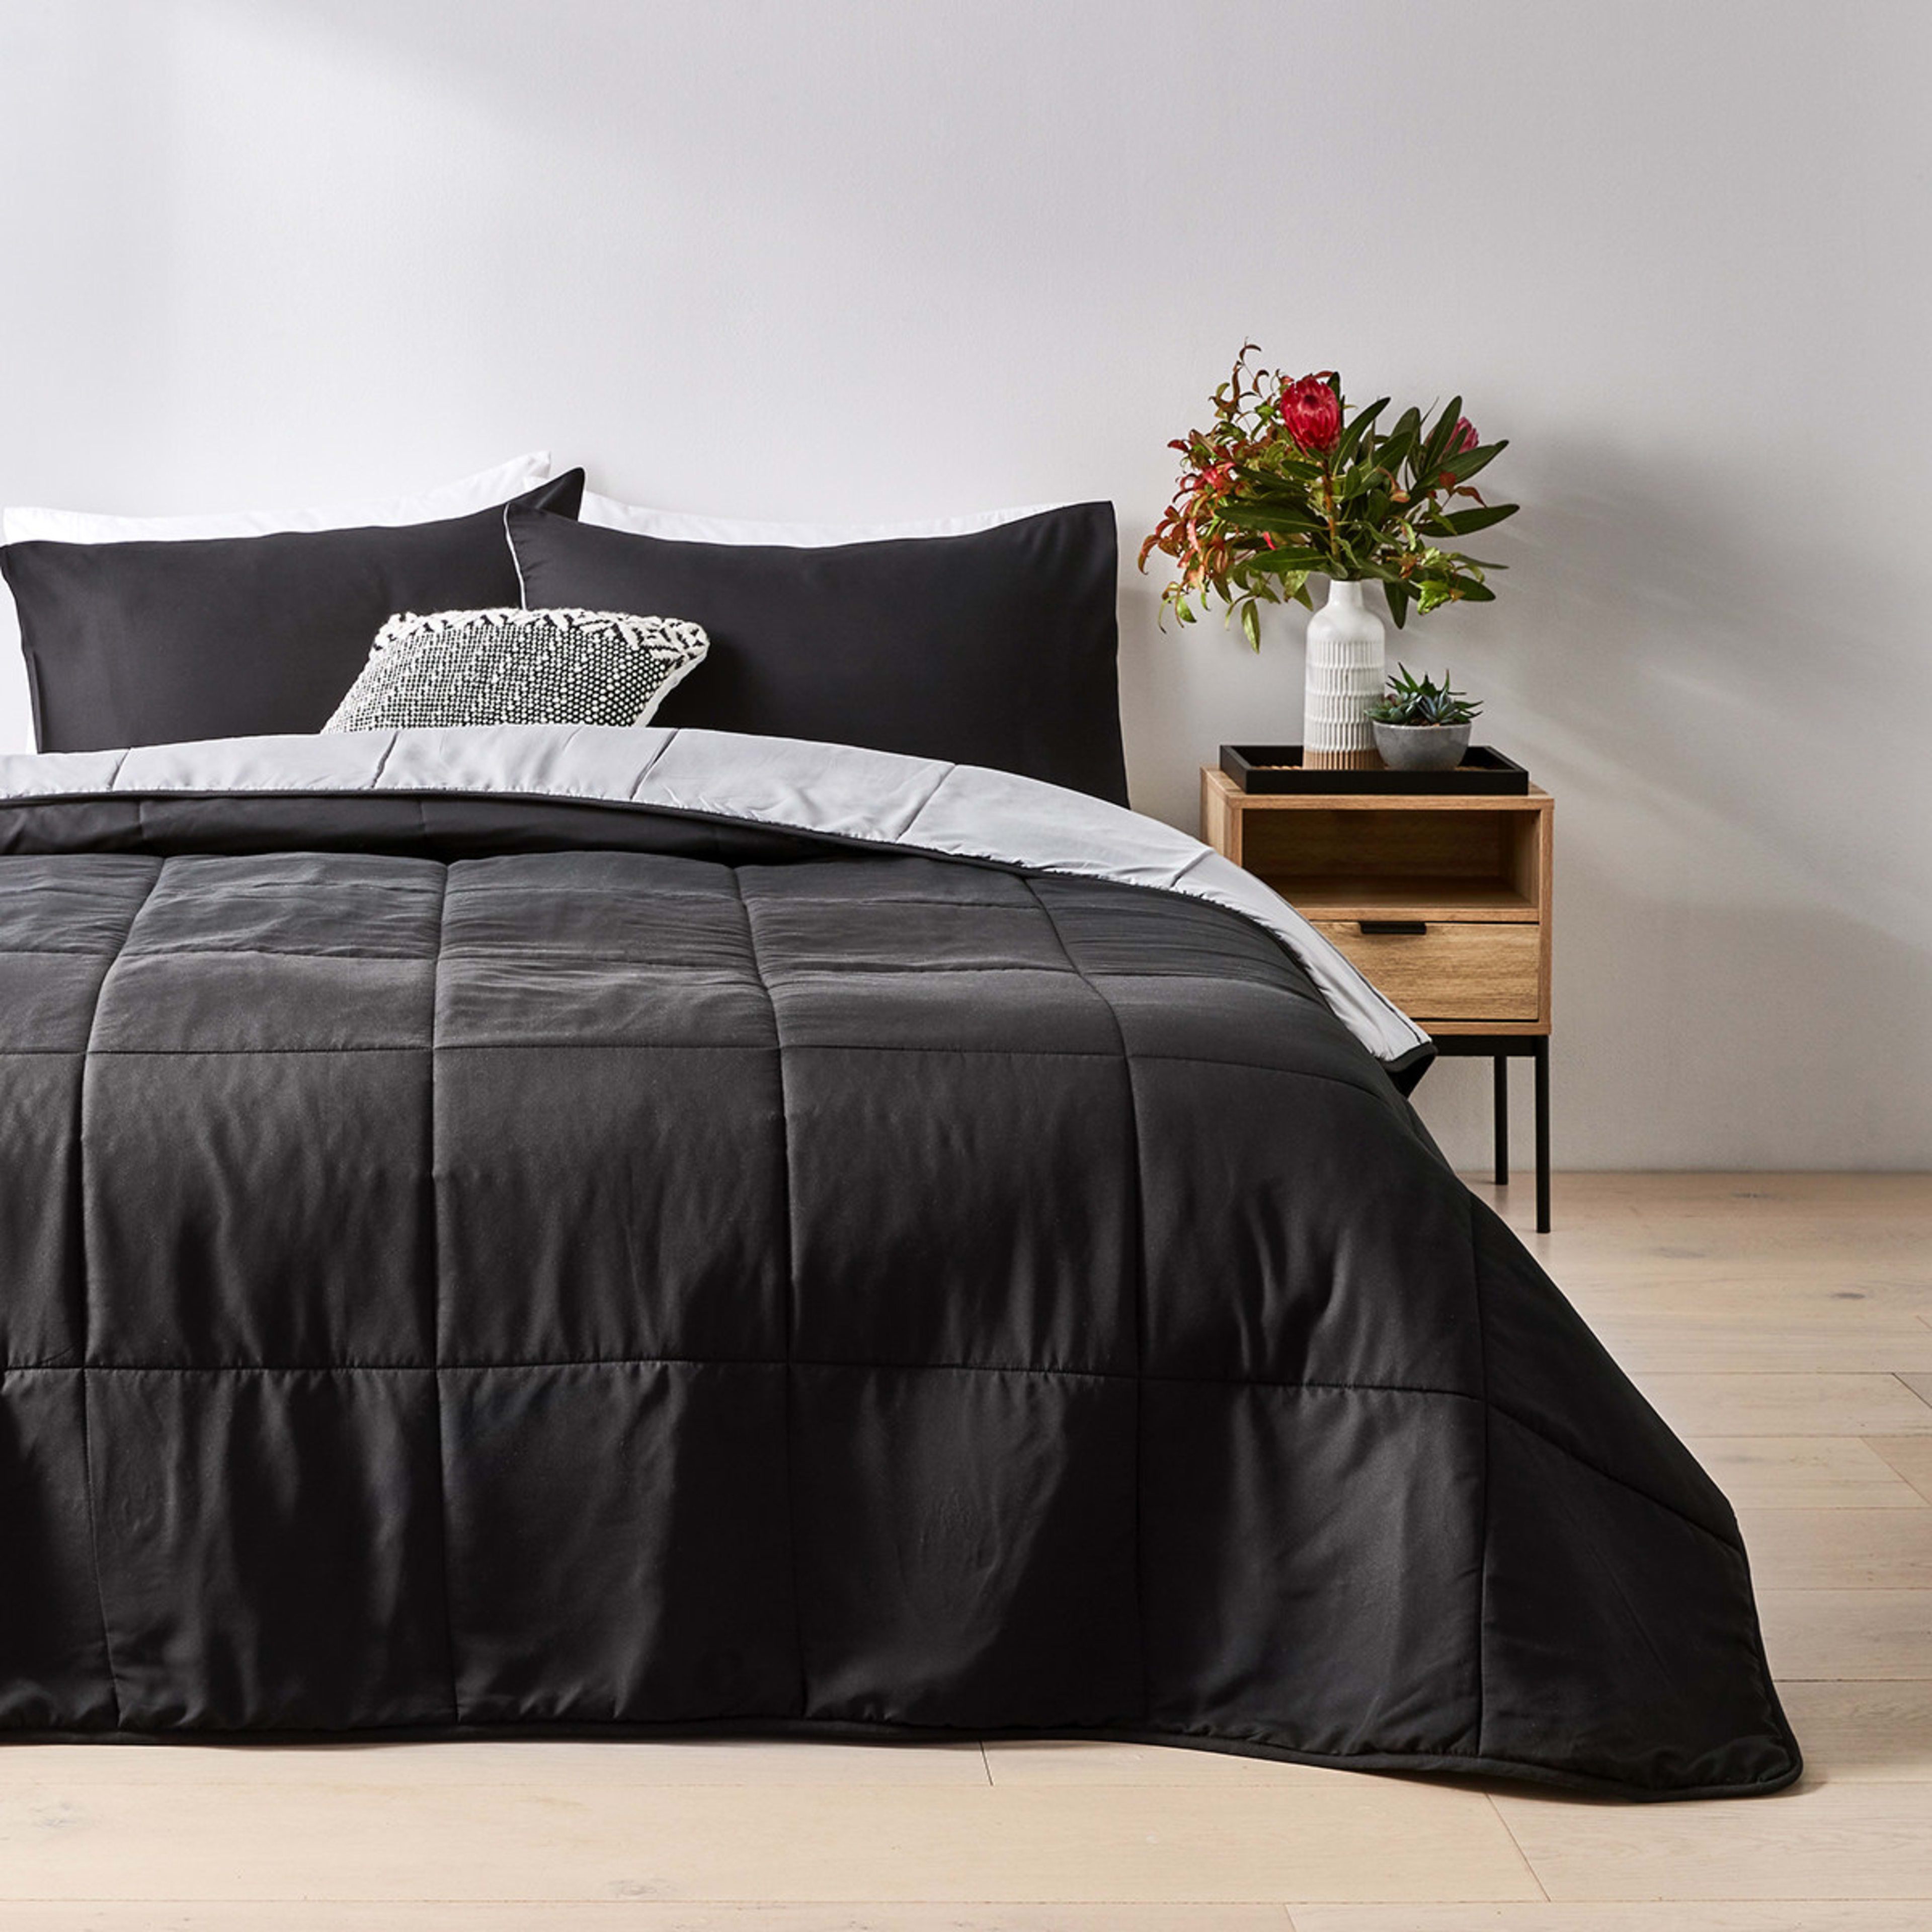 Reversible Comforter Set - Double Bed, Black